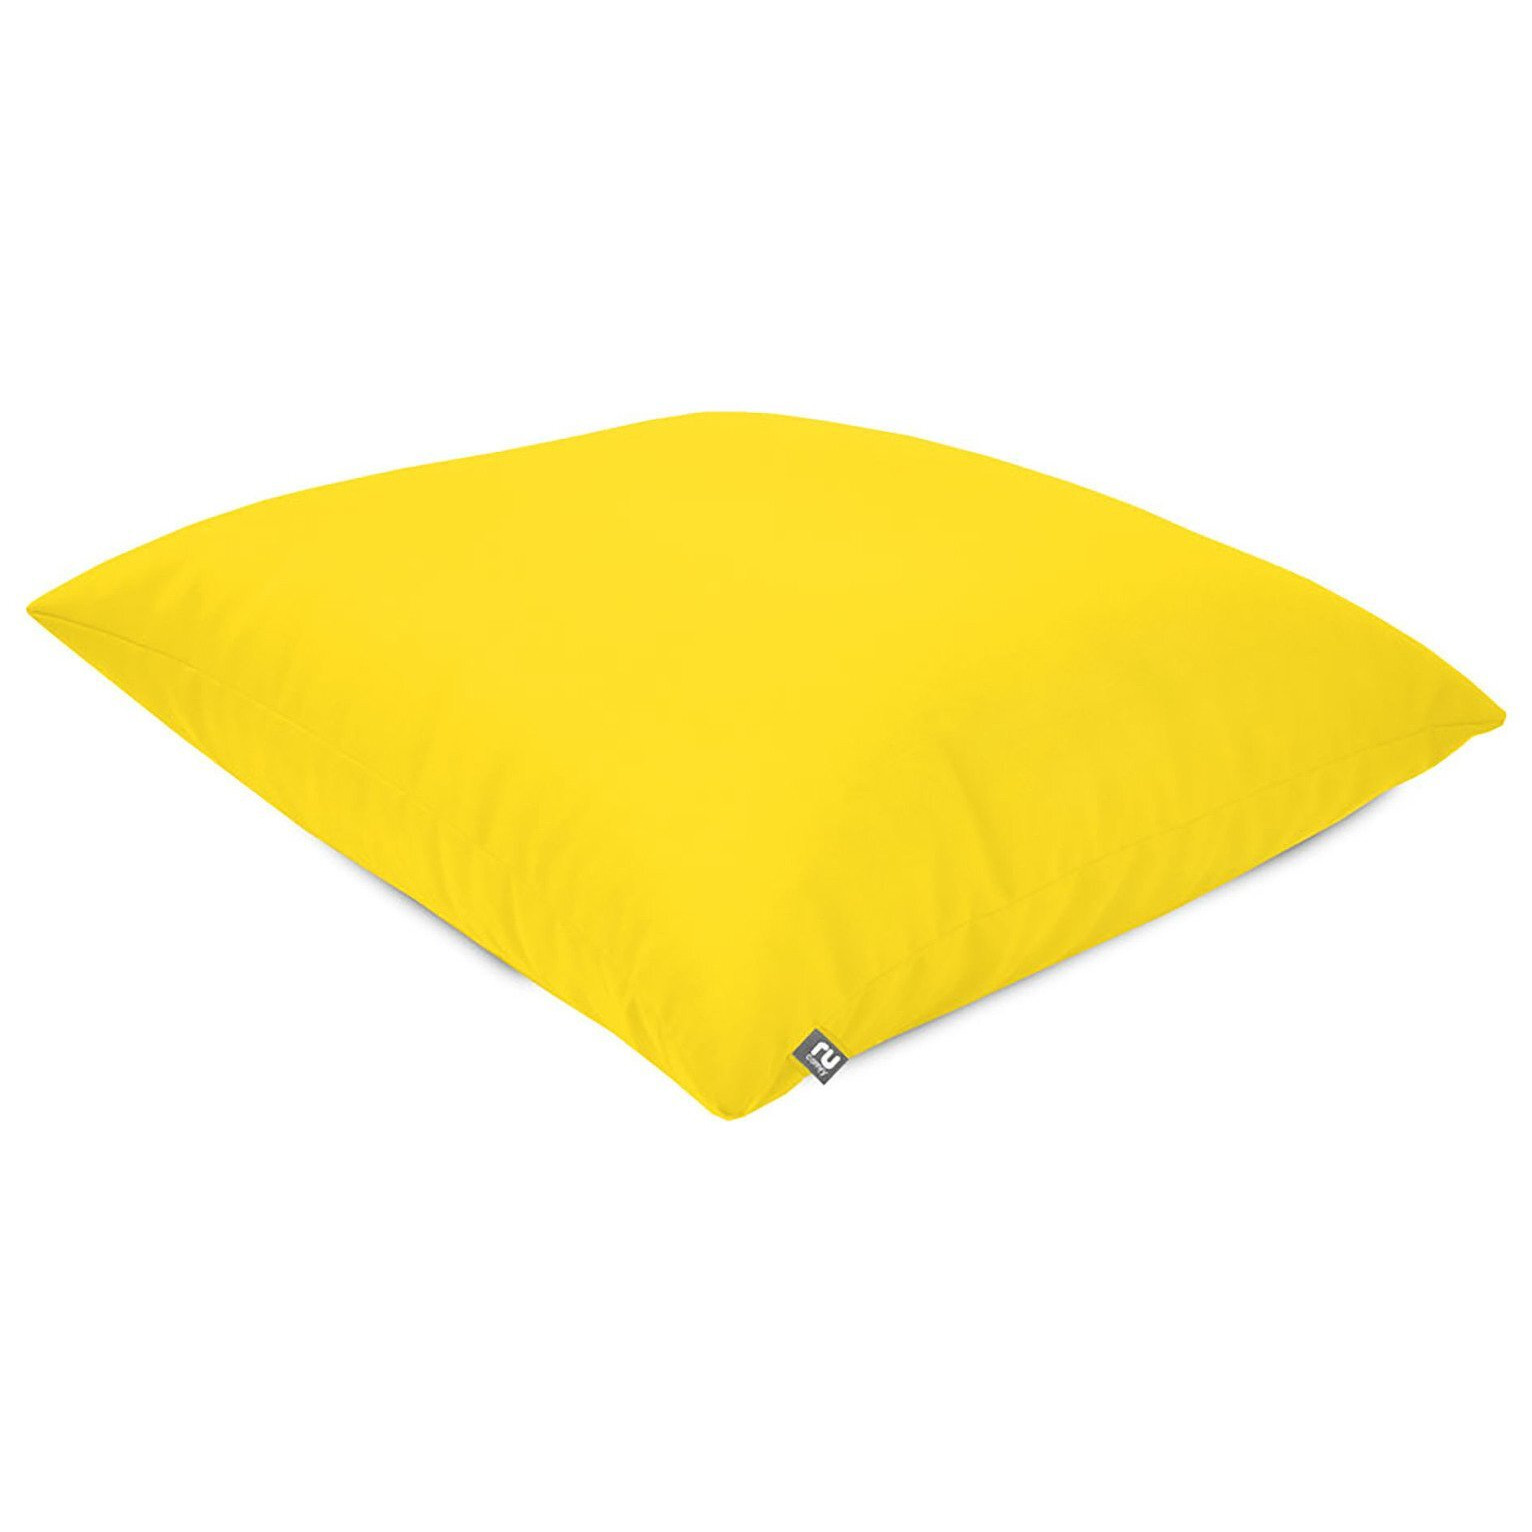 rucomfy Indoor Outdoor Large Floor Cushion - Yellow - image 1